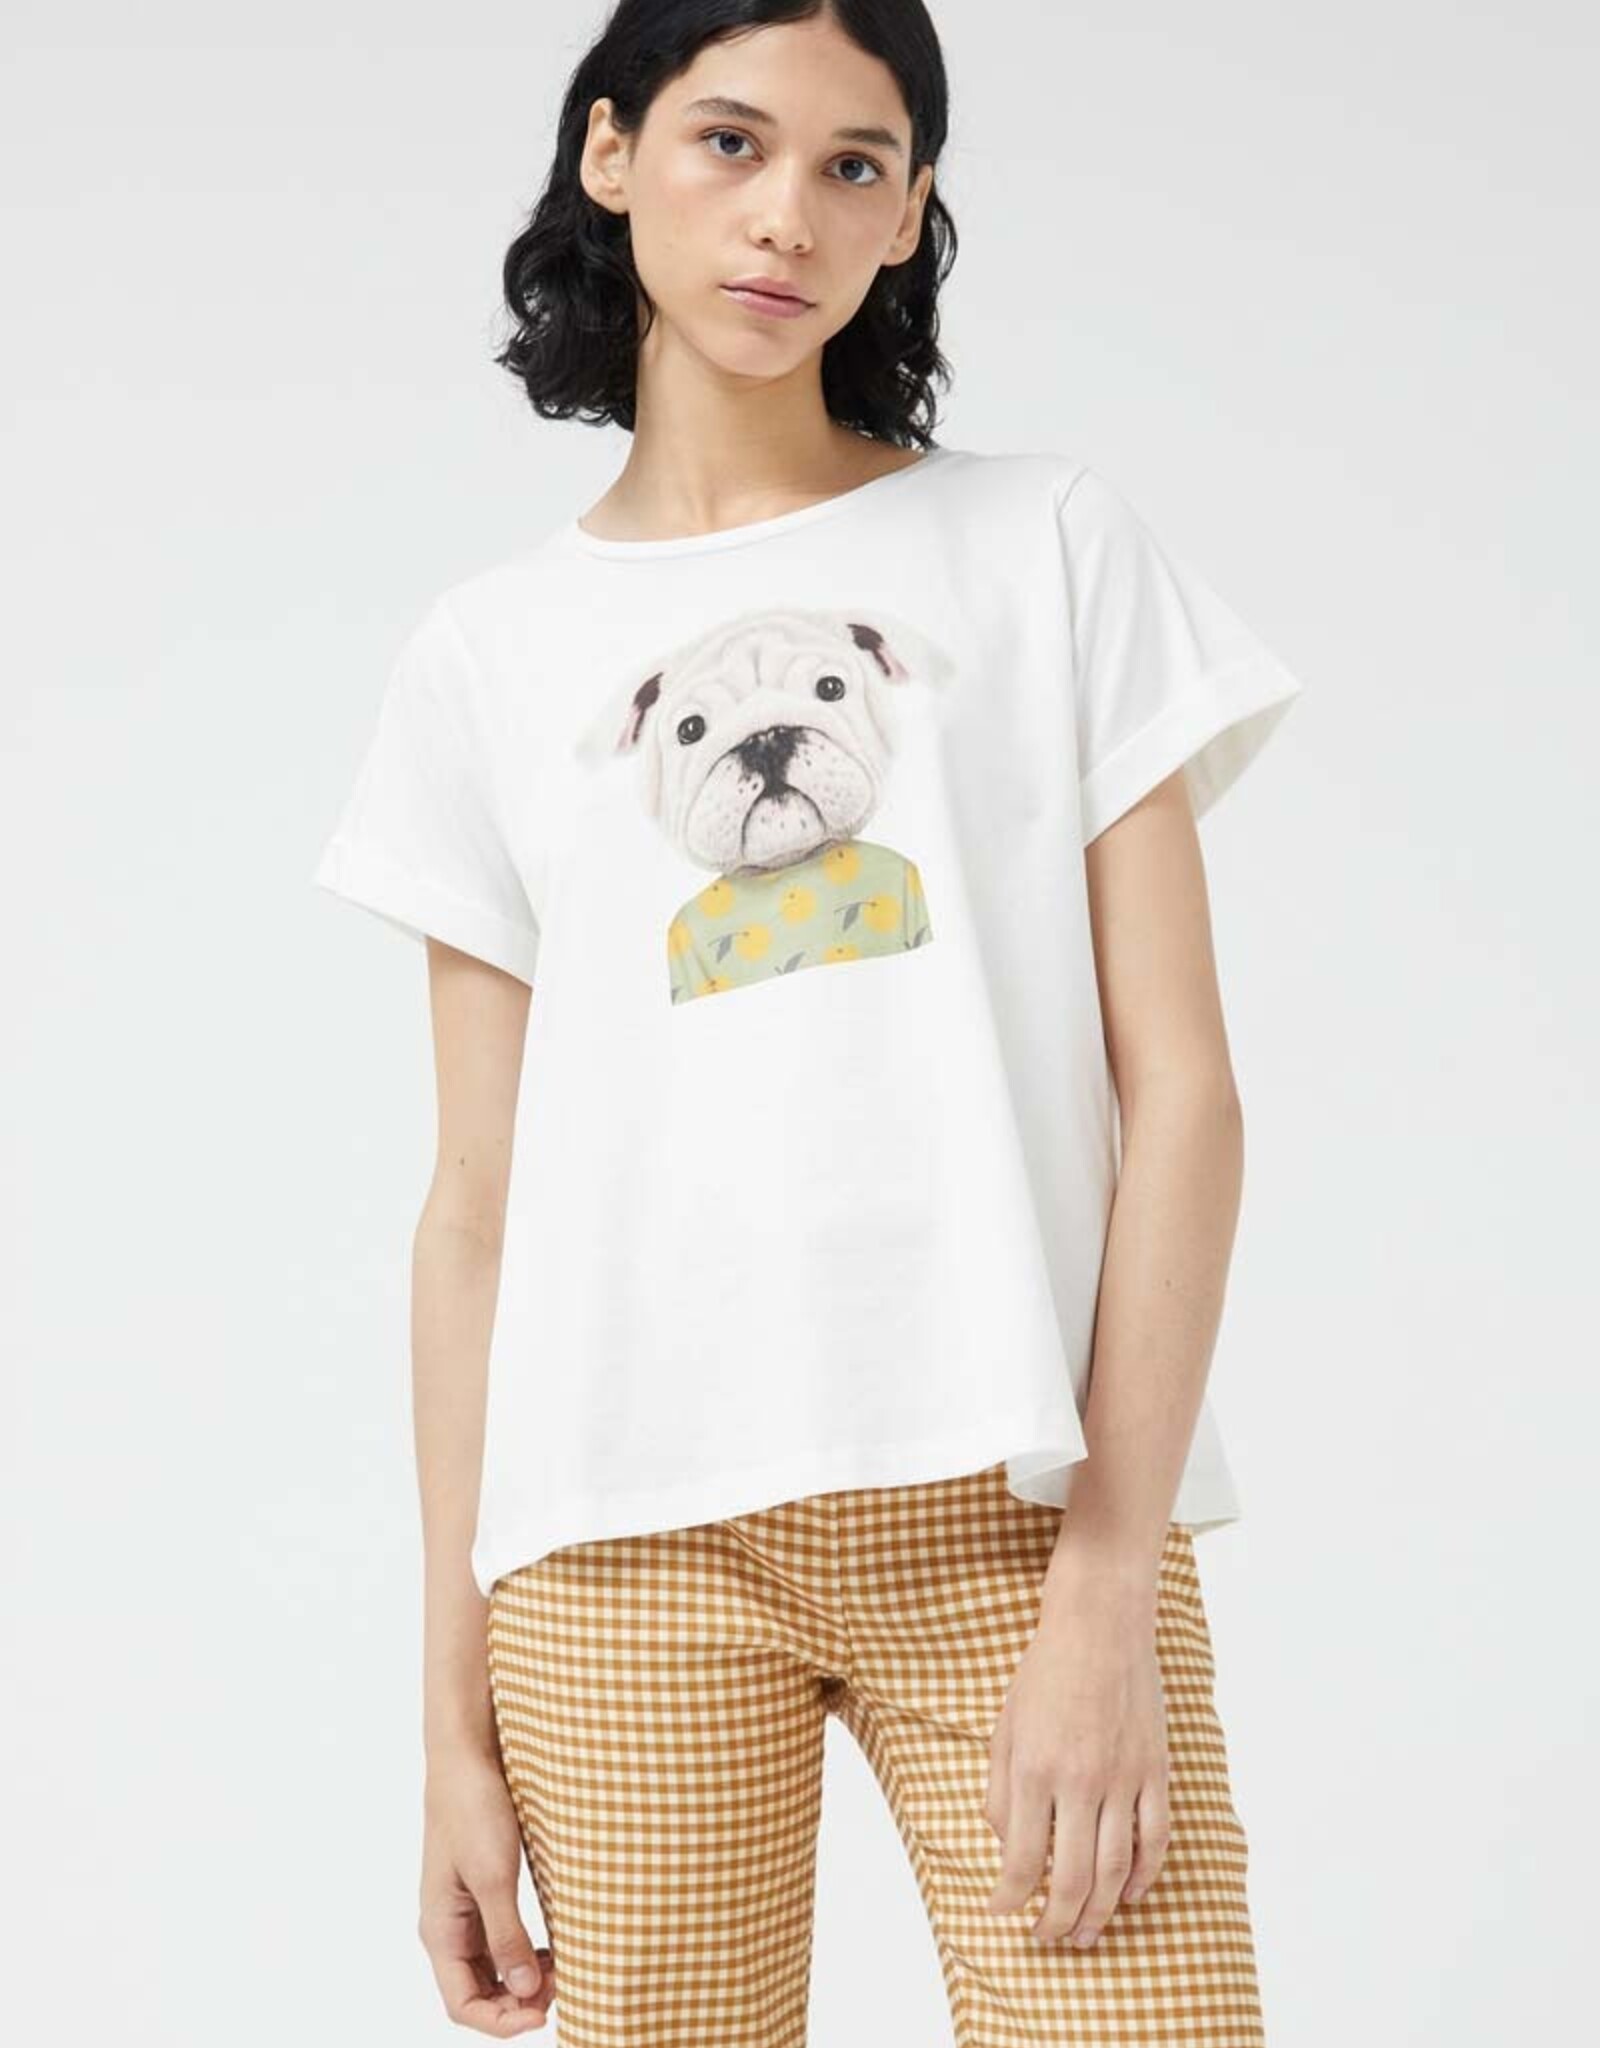 Compania Fantastica Dog Face T-Shirt